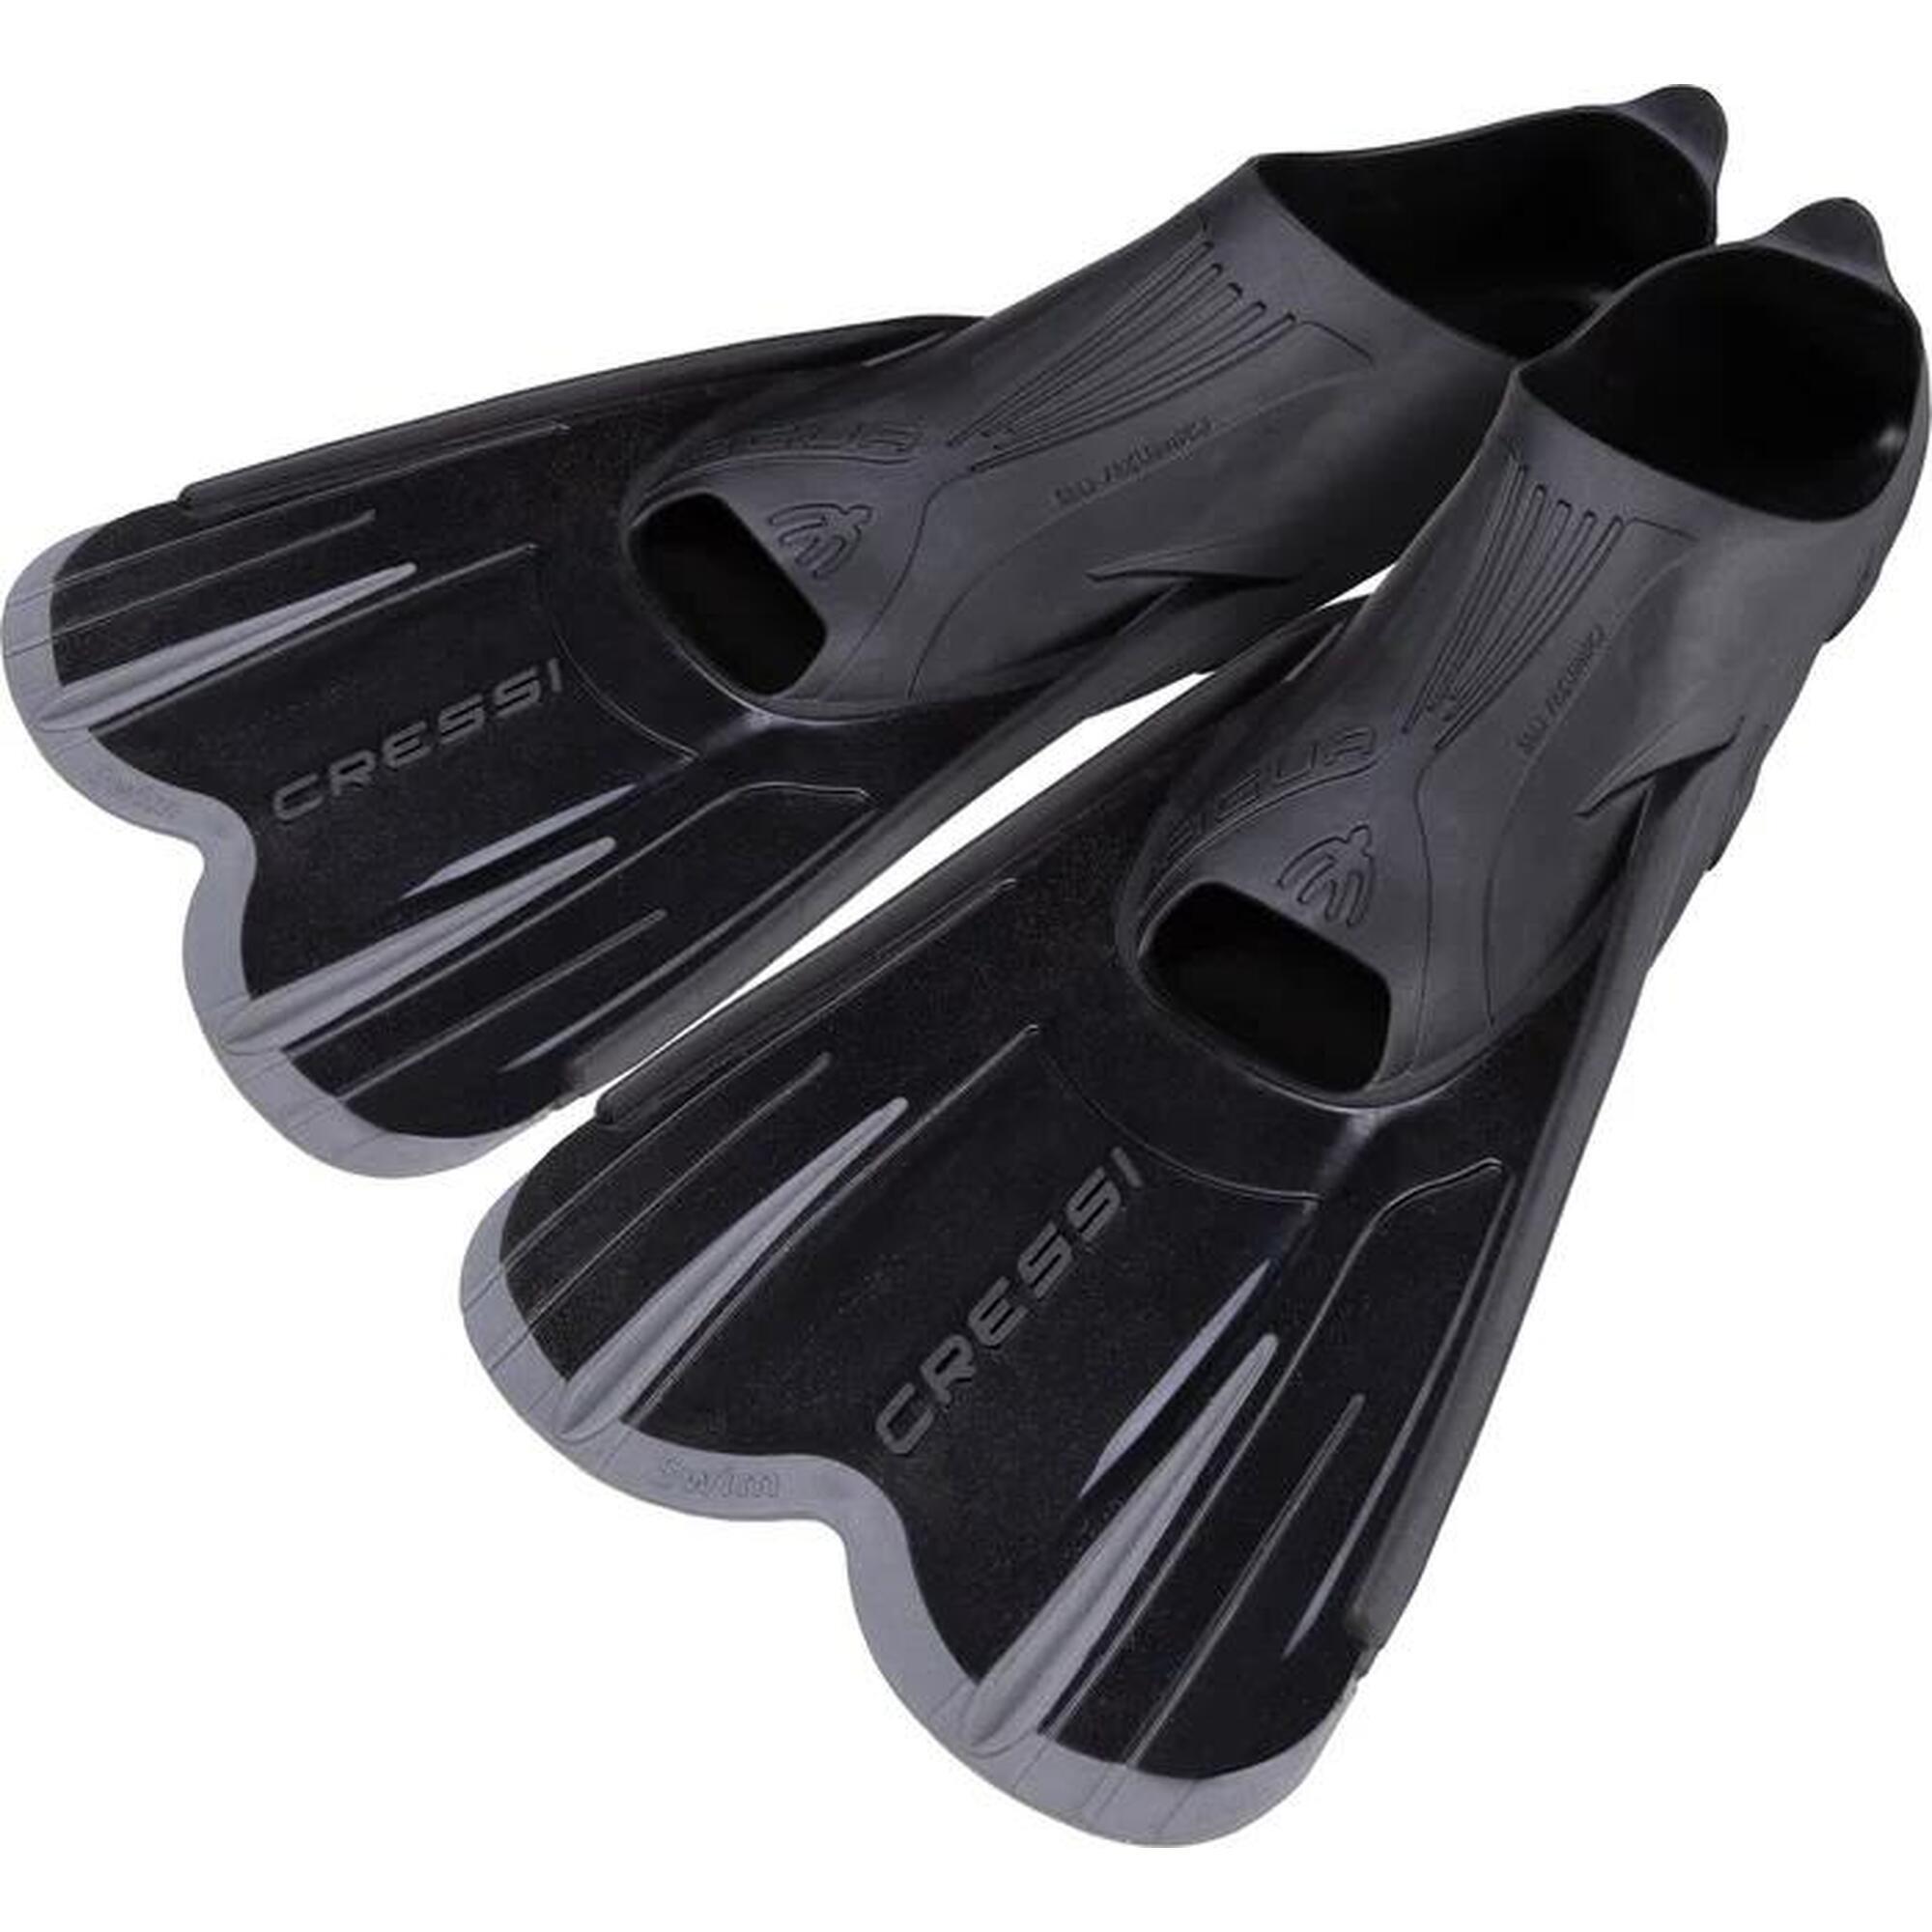 Agua Short Fins Short blade swimming fins - Black 41/42